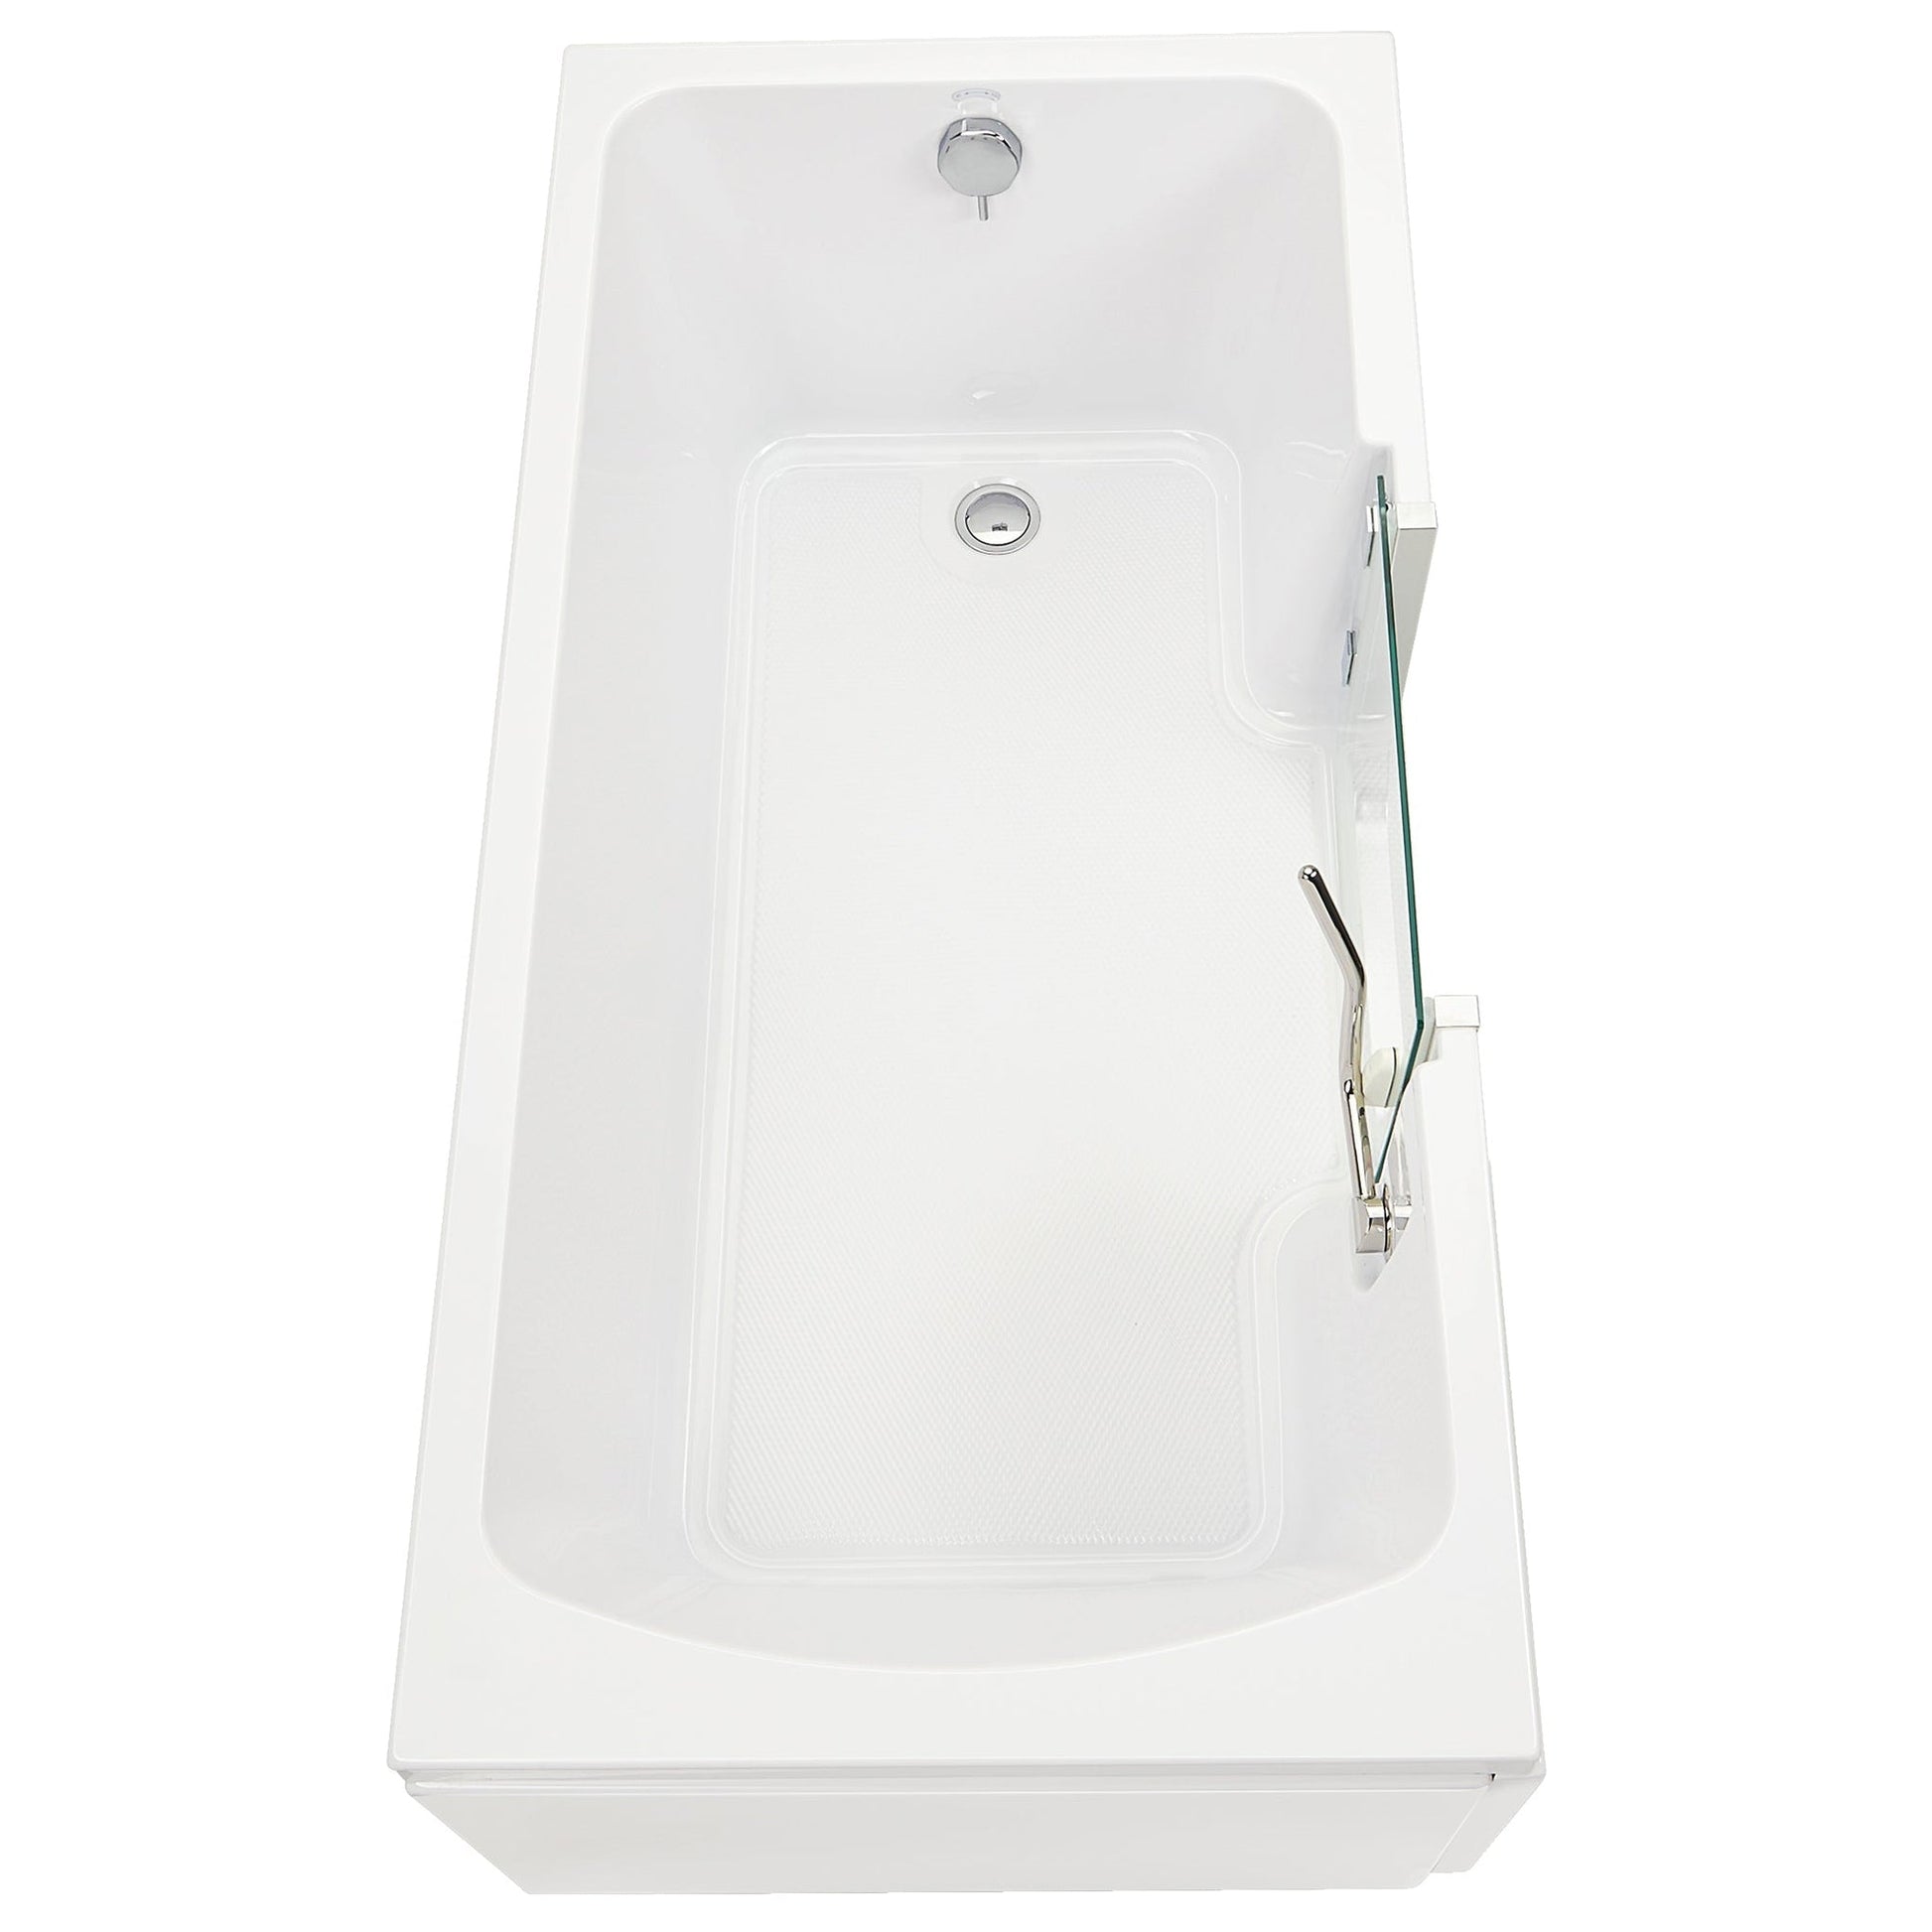 Ella's Bubbles Laydown 30" x 60" White Acrylic Soaking Walk-In Bathtub With Right Inward Swing Door